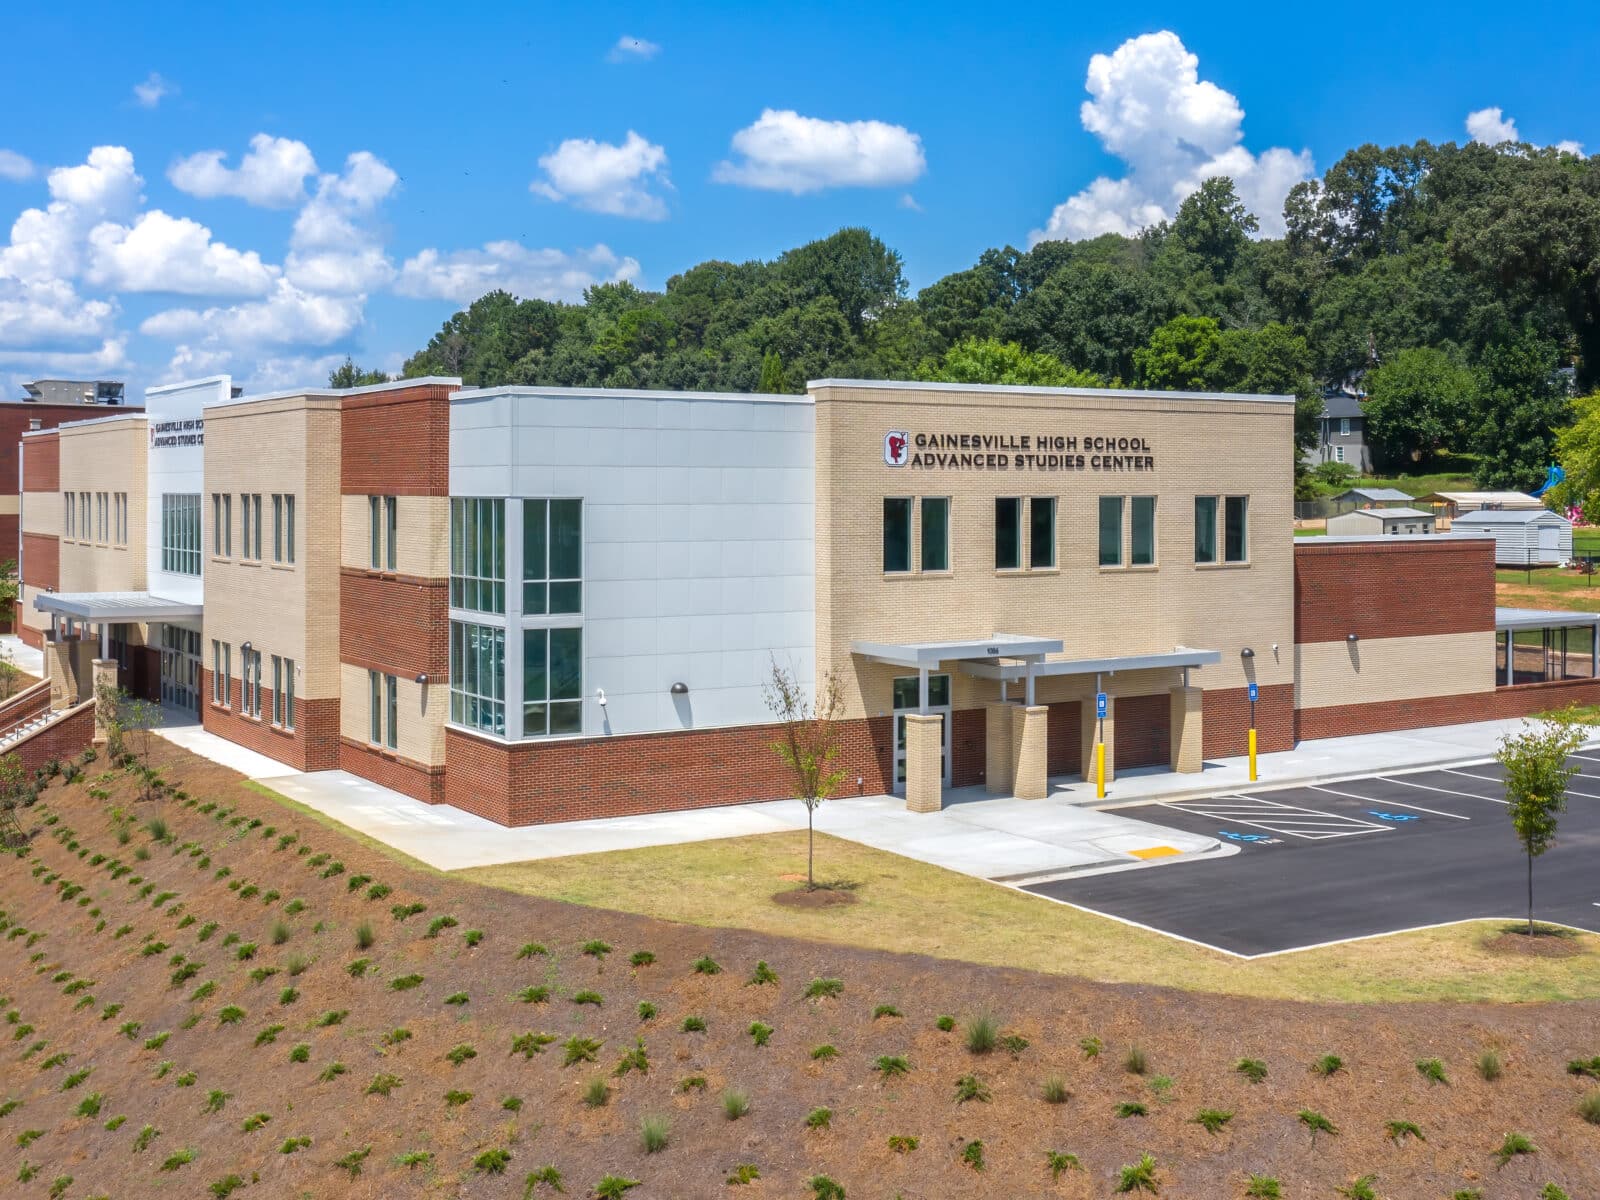 exterior image of gainesville high school advanced studies center